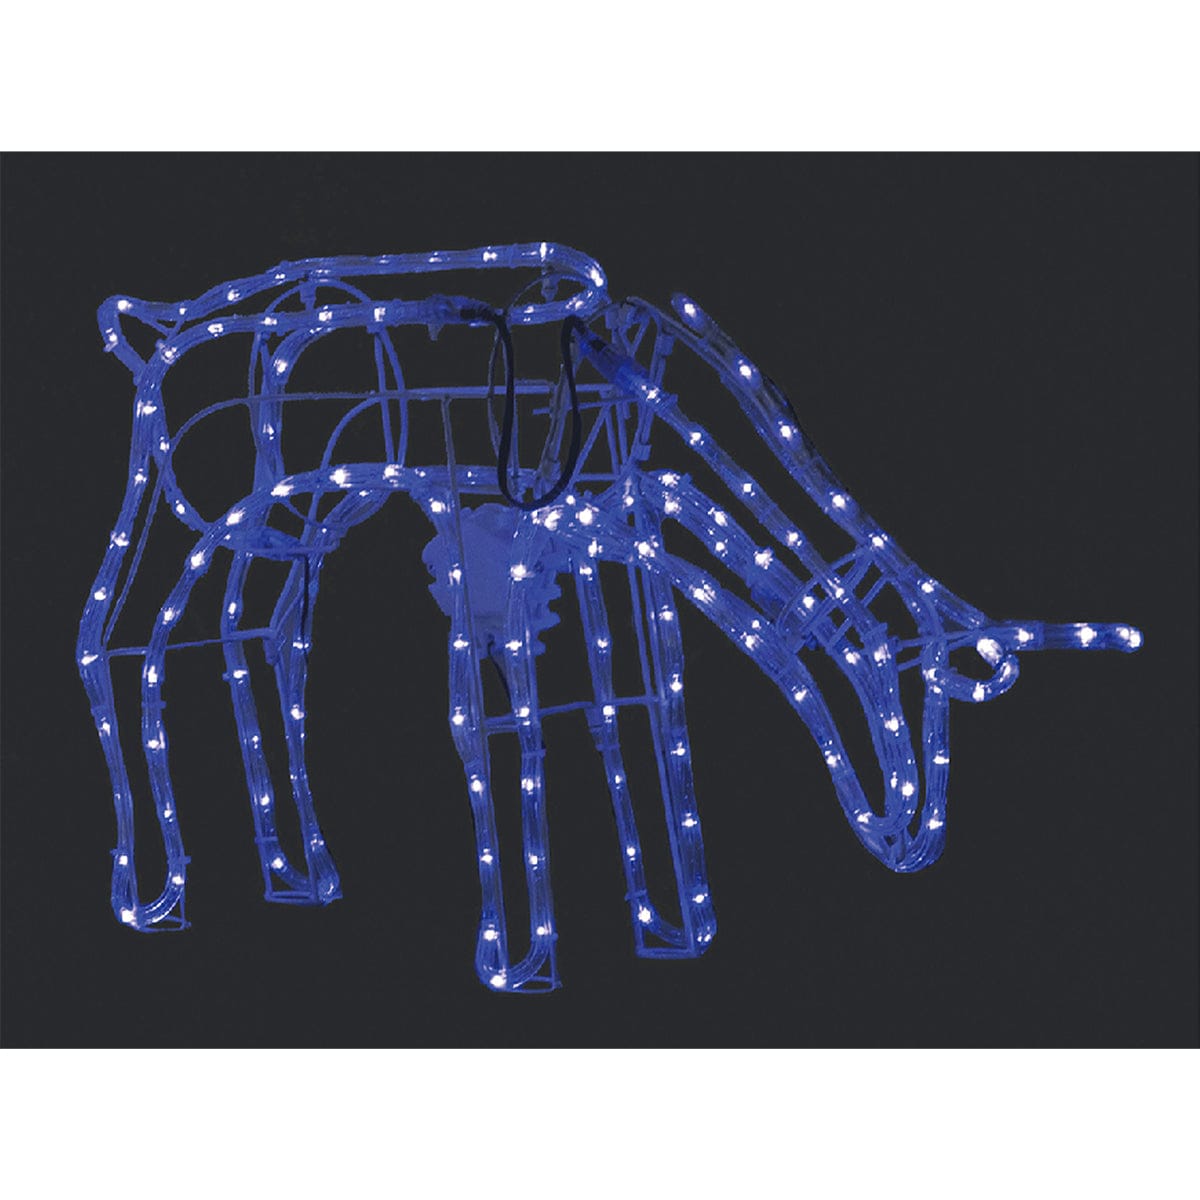 Promo Christmas Figure Blue 3D Illuminated LED Reindeer Stand Feeding with Motor | Three Colour Options LL0013R008B-P